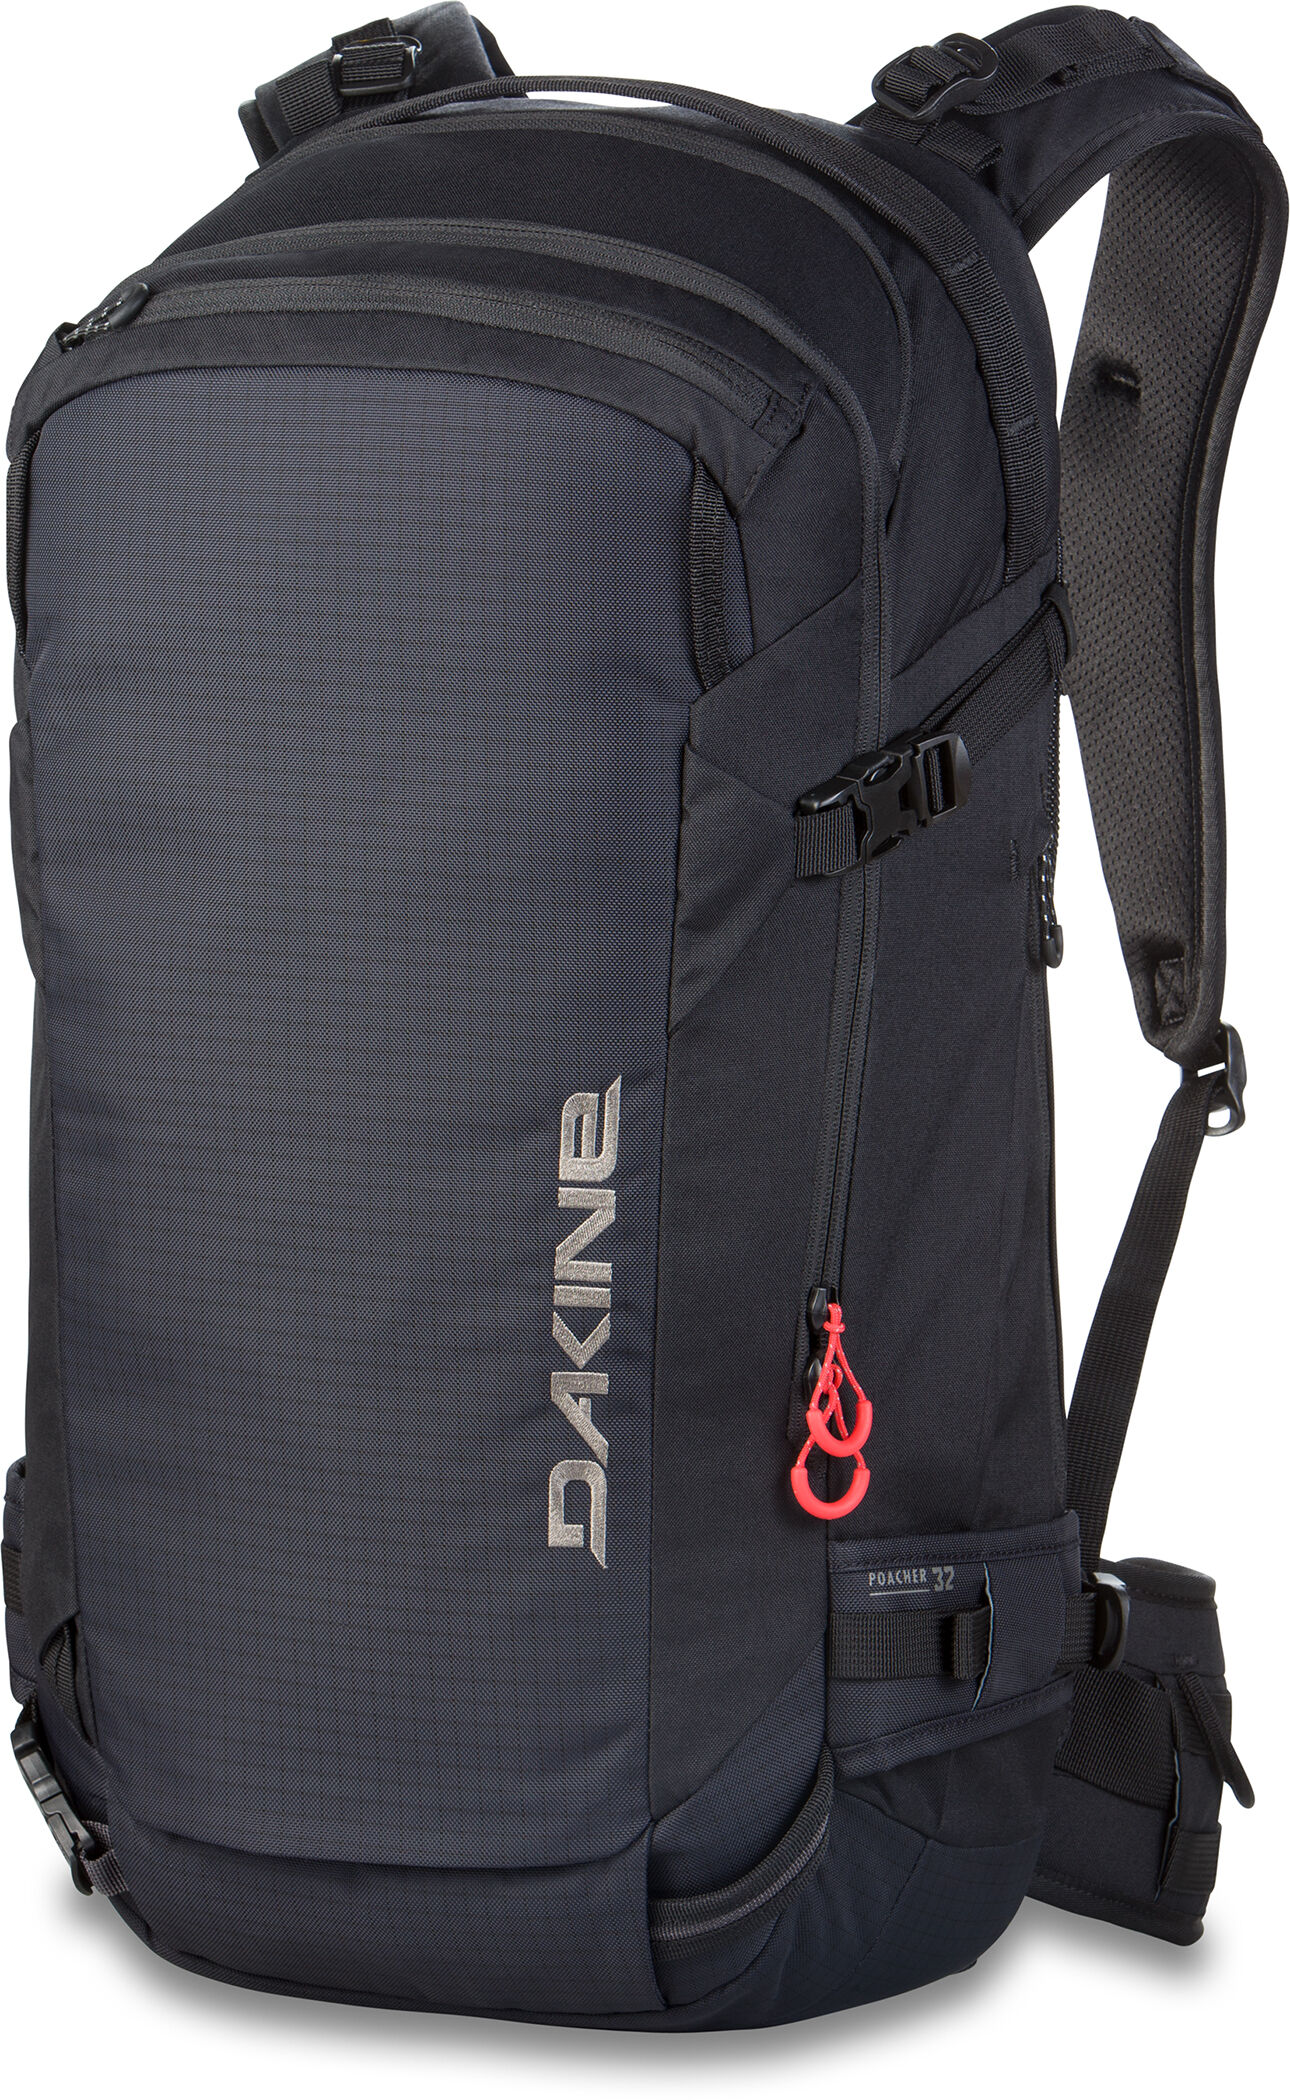 Dakine Poacher 32L - Ski Touring backpack